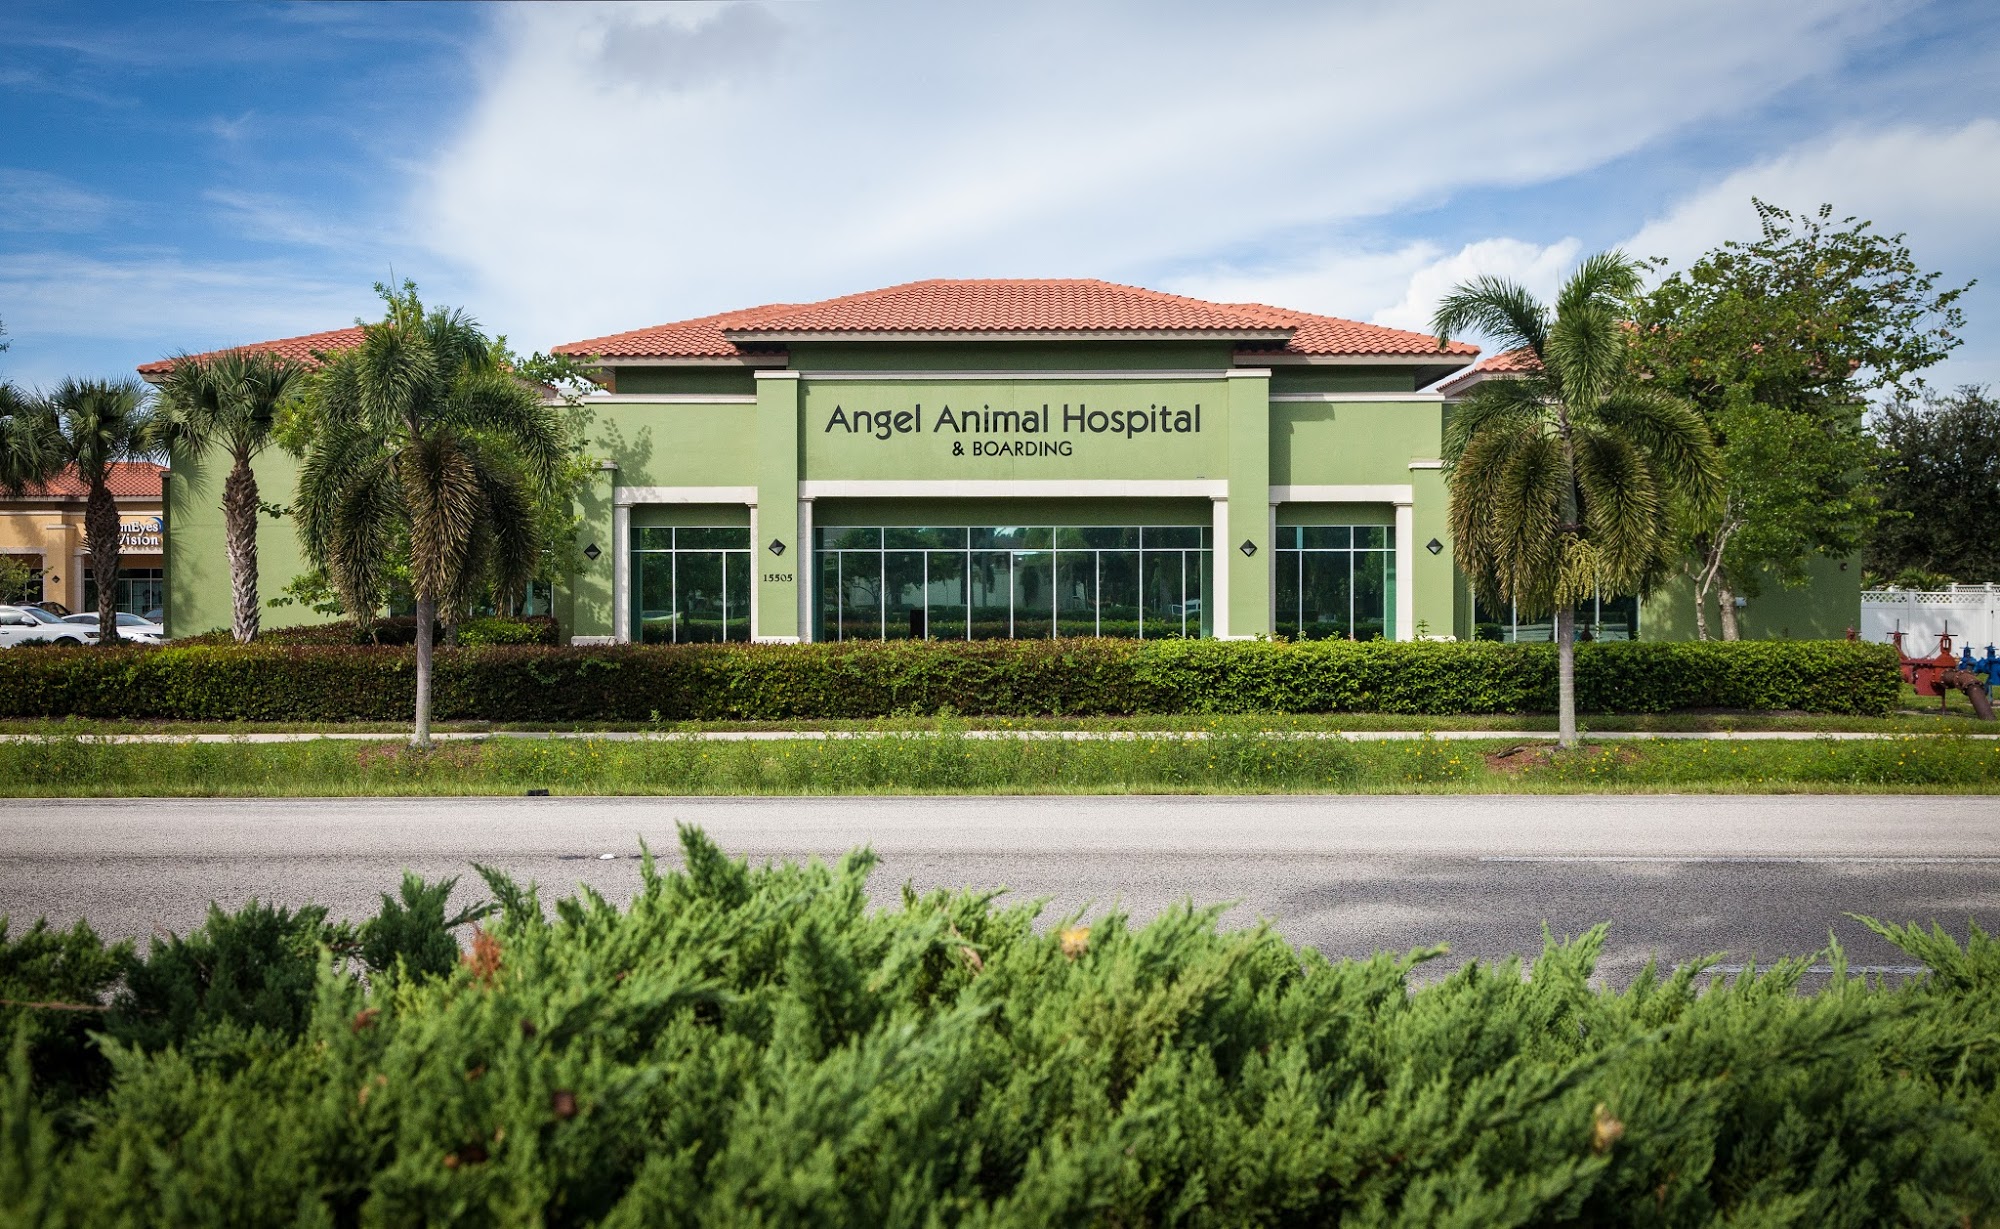 Angel Animal Hospital & Boarding